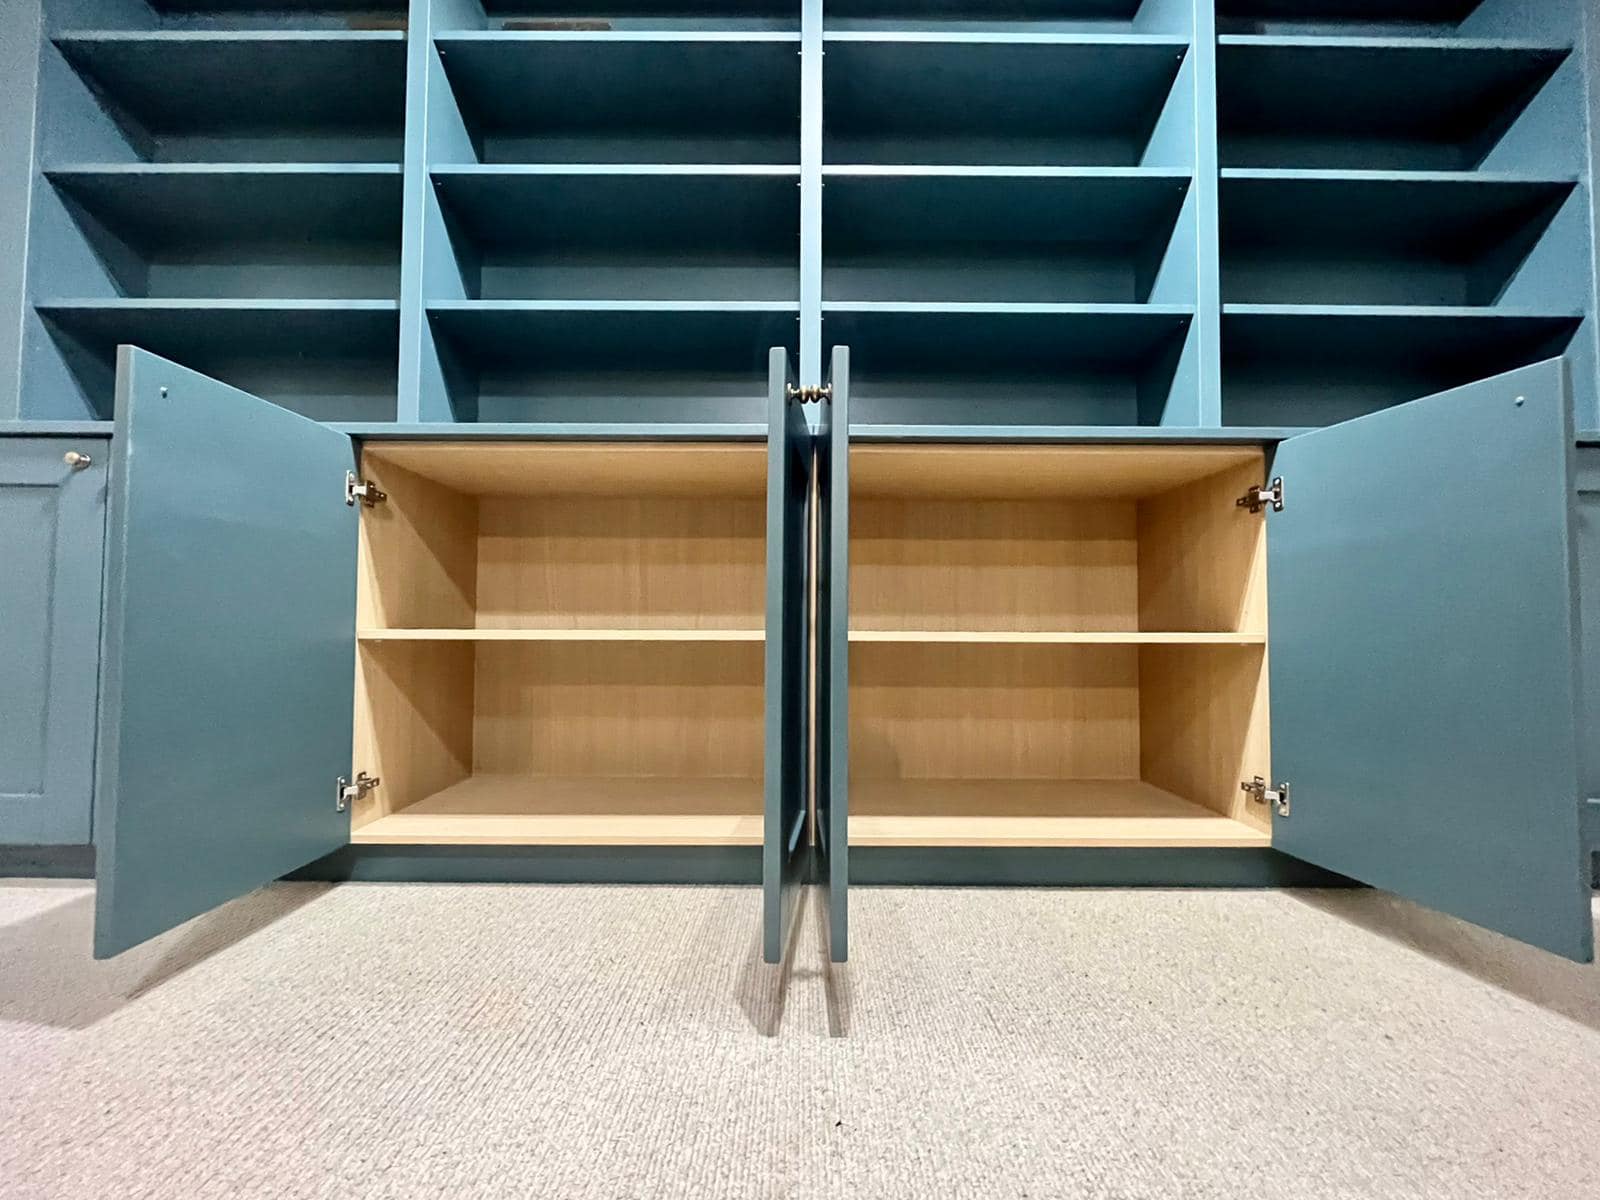 Built in bookshelf colour F&B Inchrya Blue with oak interiors